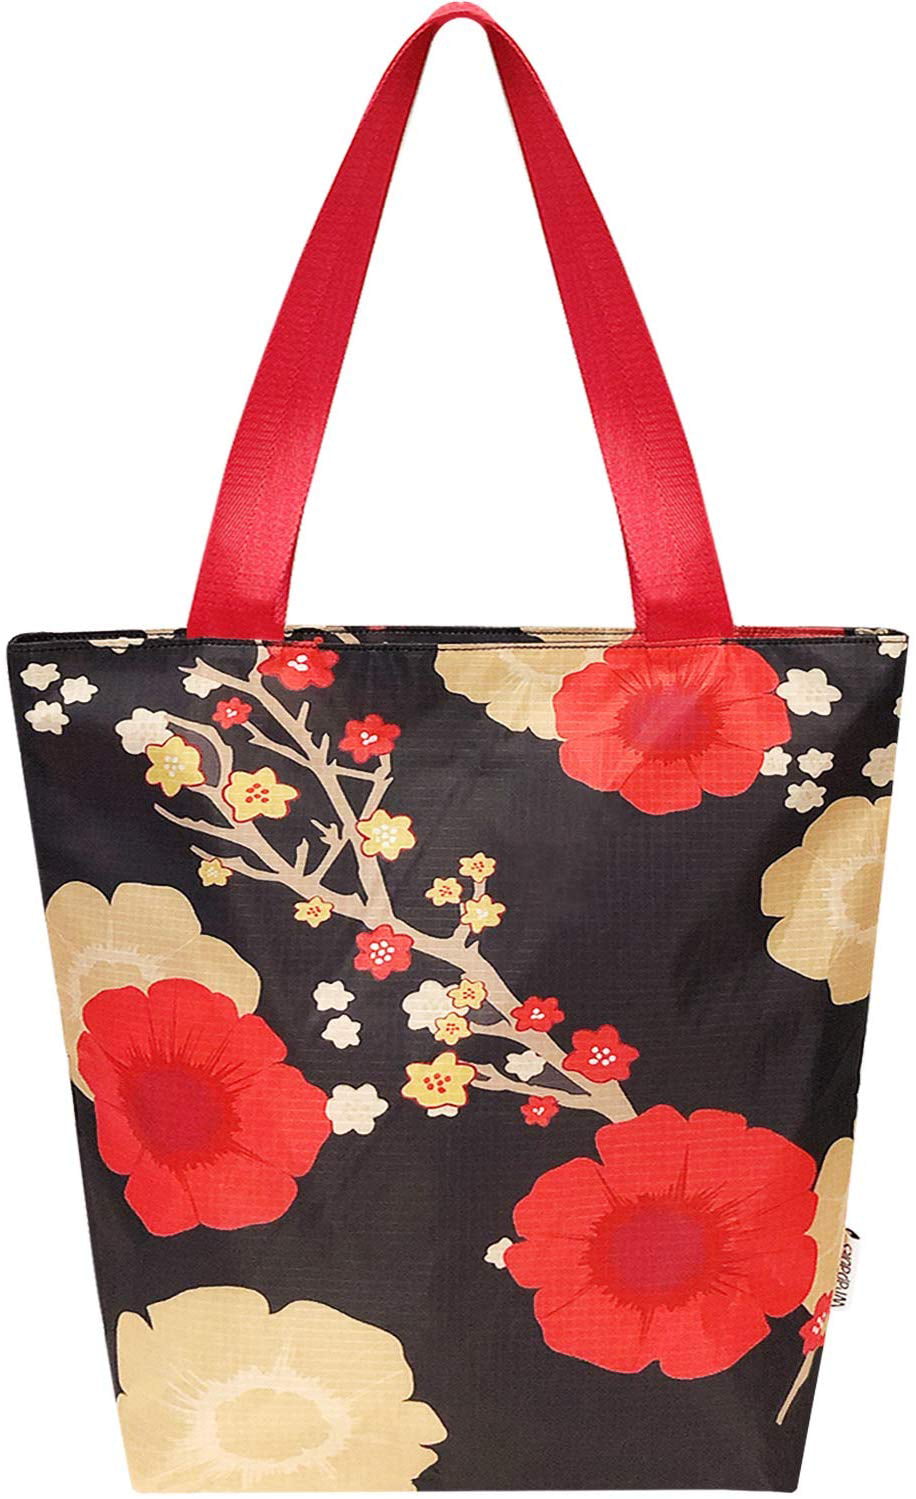 Tote Bags Orange Colorful Owl Flowers Travel Totes Bag Fashion Handbags Shopping Zippered Tote For Women Waterproof Handbag 